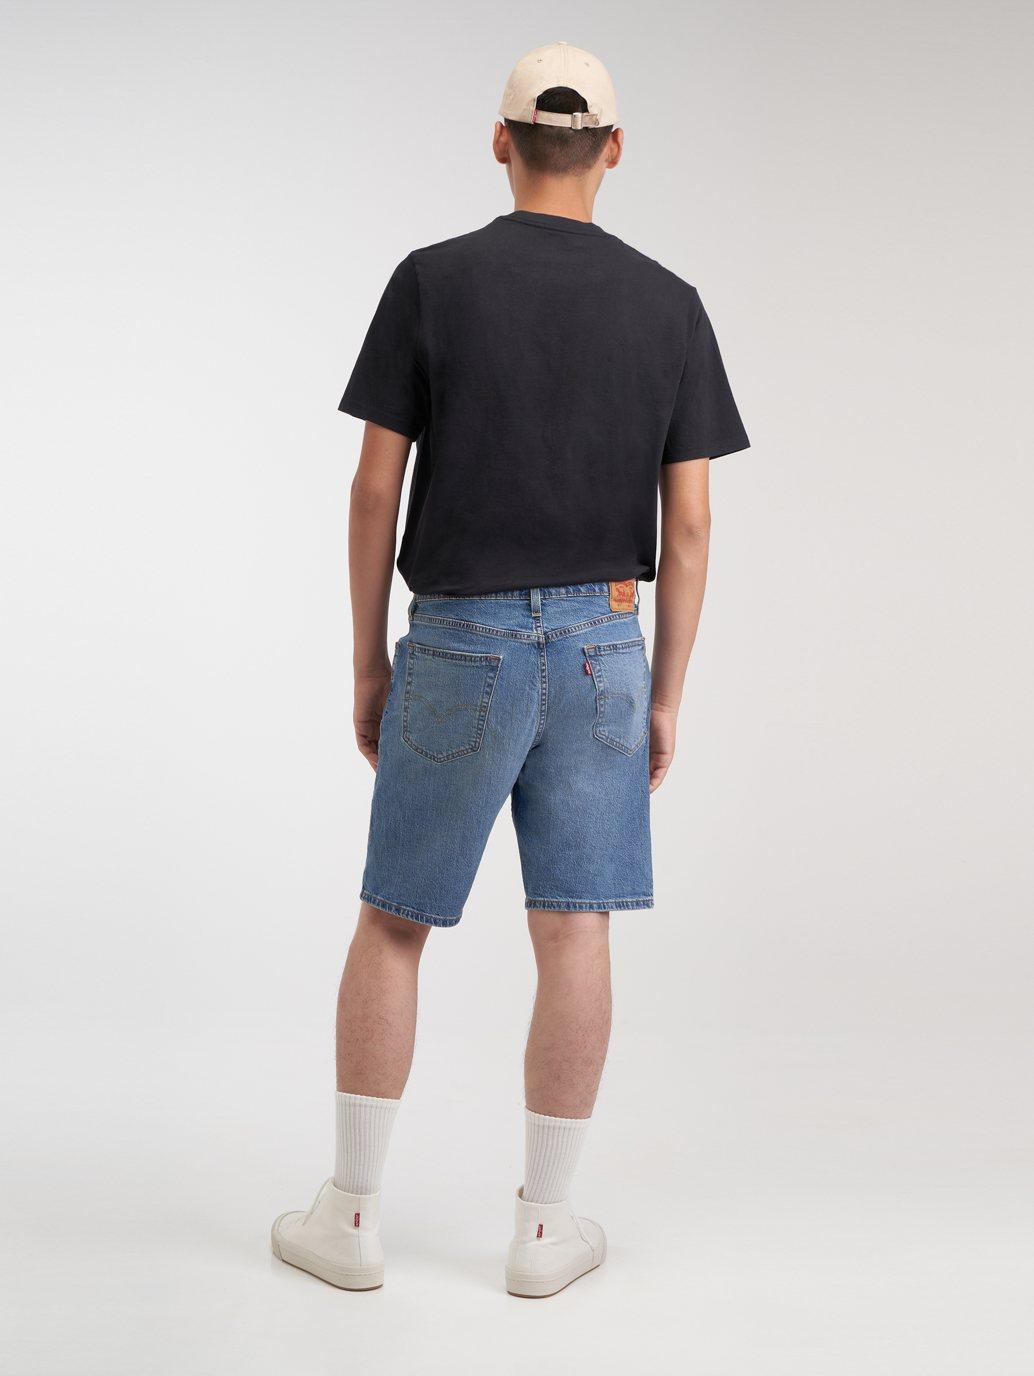 levis singapore mens standard jean shorts 398640006 02 Back